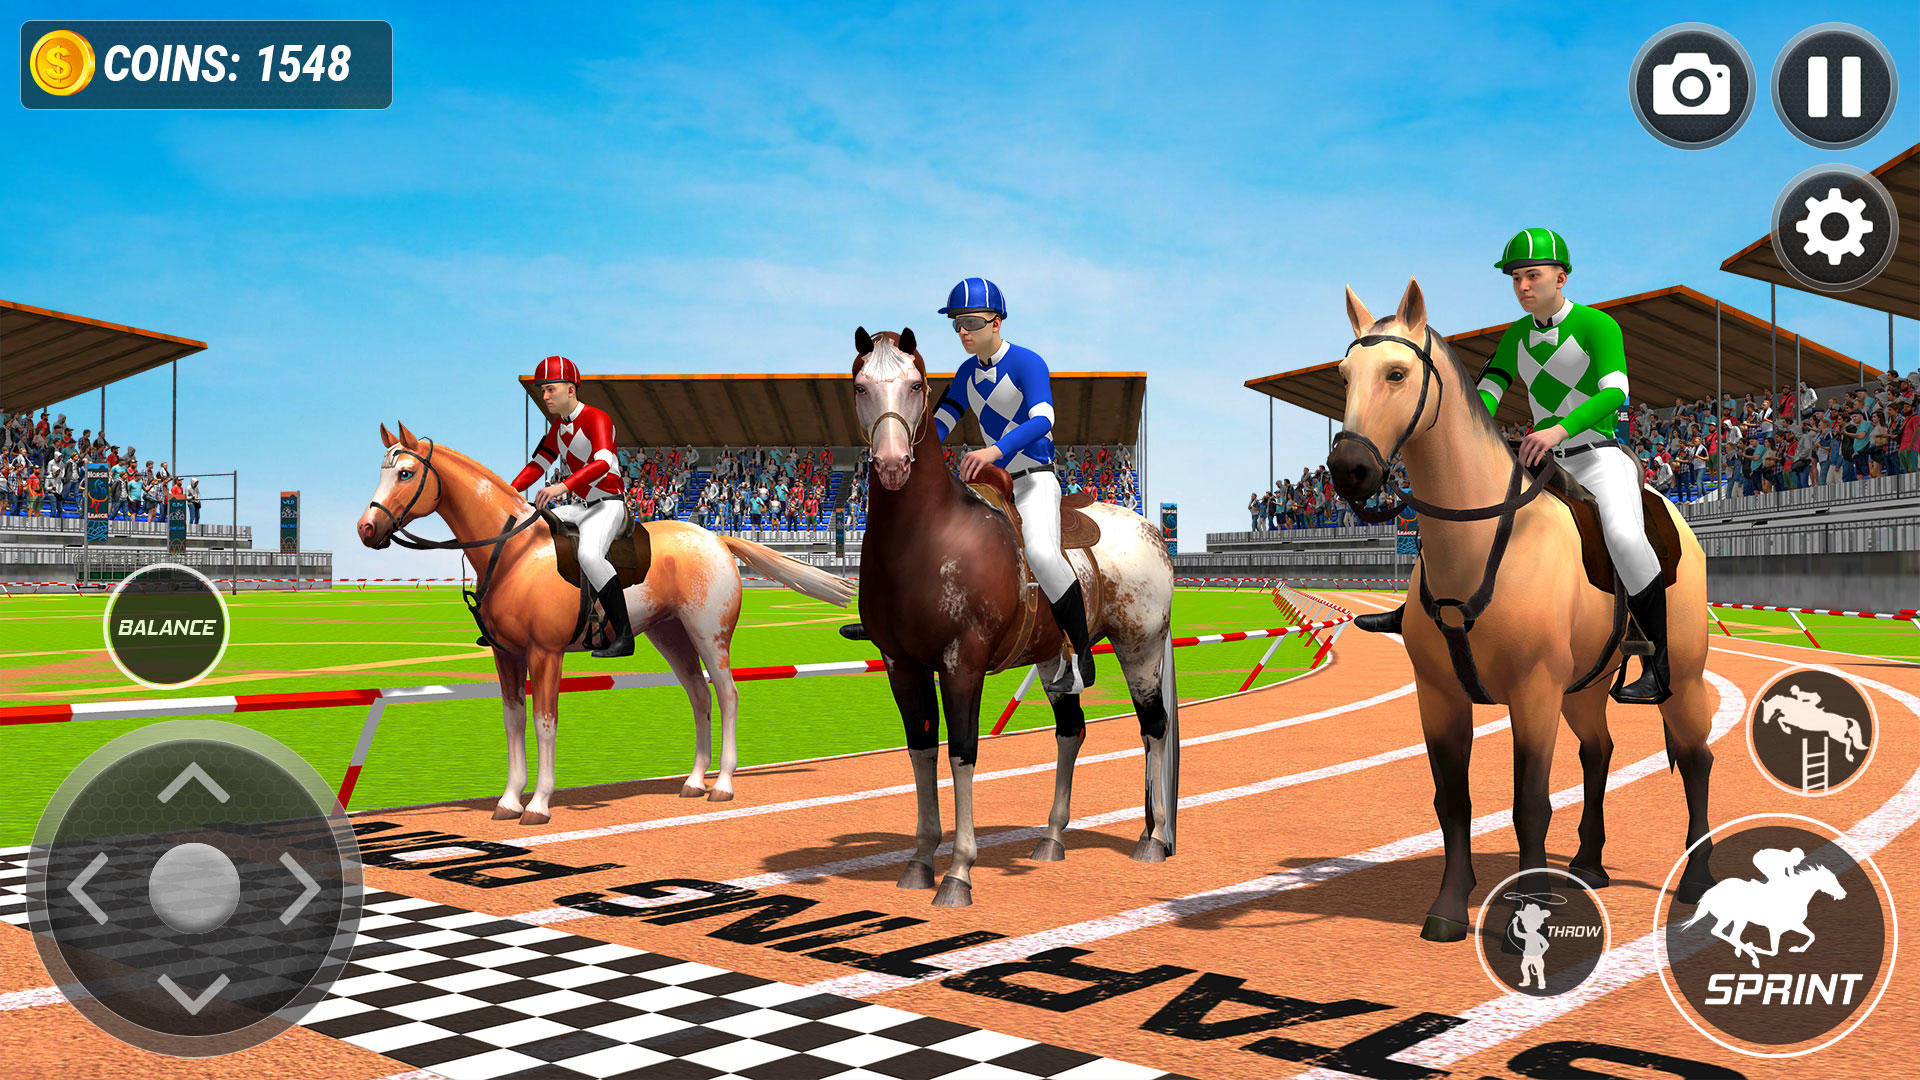 Horse Racing - CORRIDA DE CAVALO EM 3D! - (Android / Gameplay